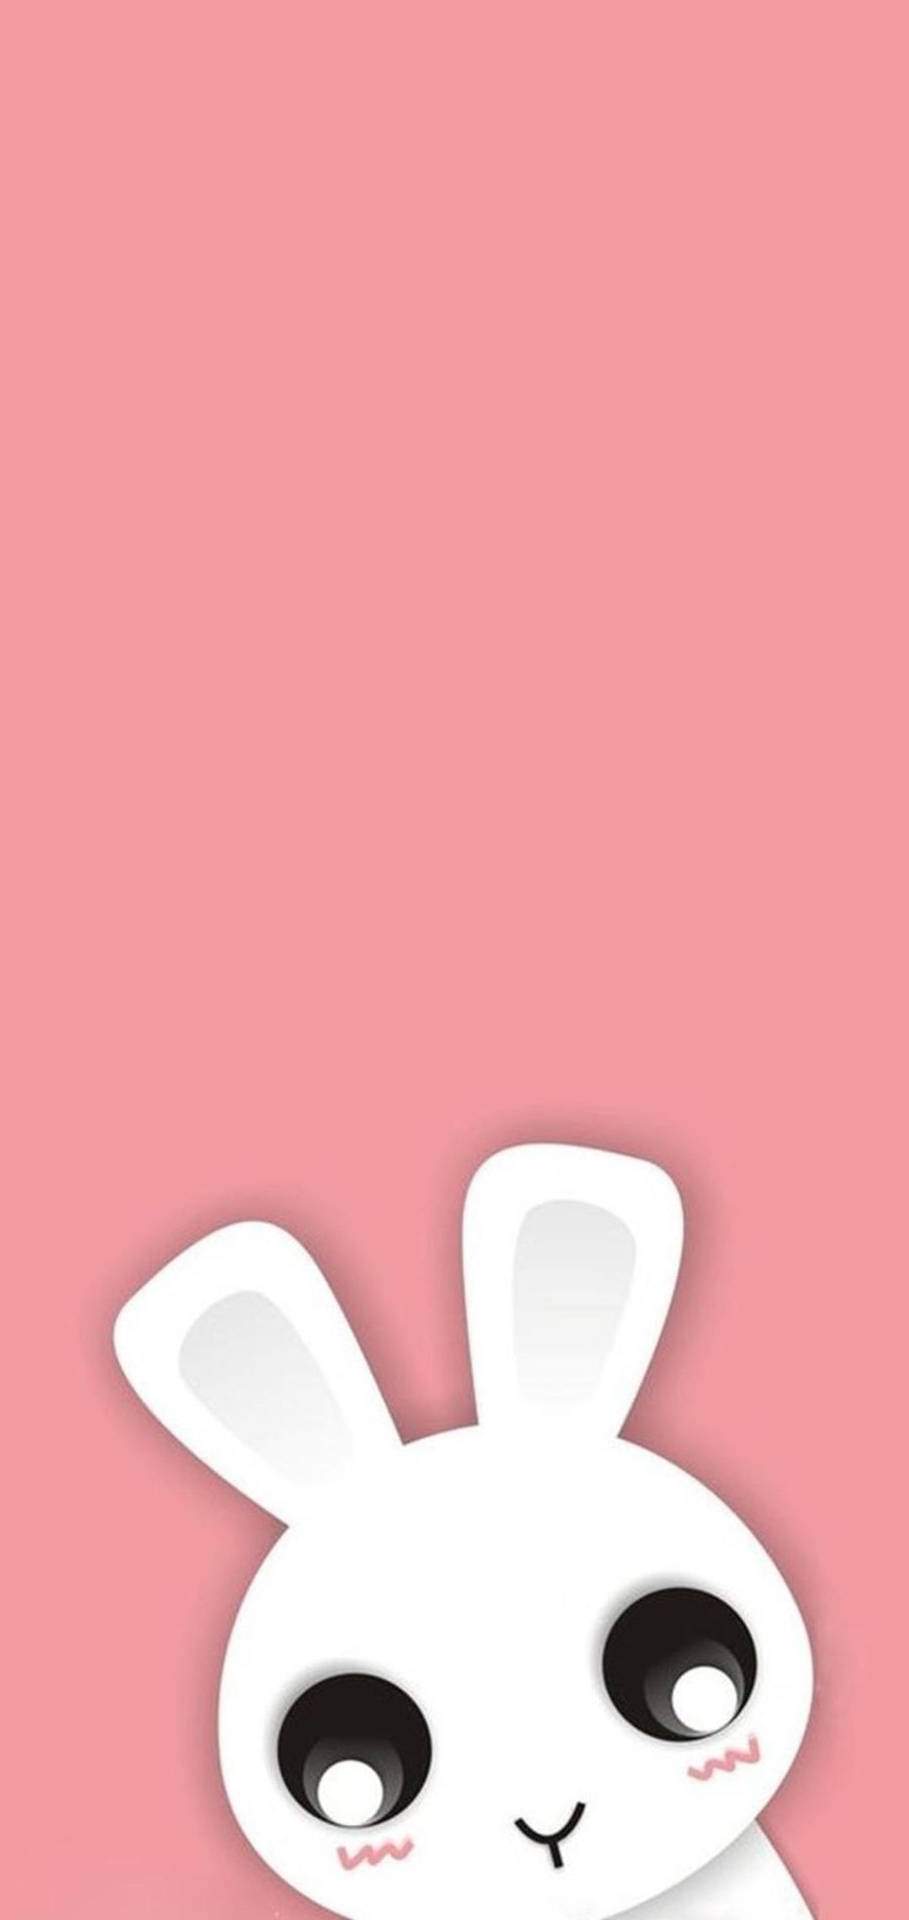 Big-Eyed Bunny Cute IPhone Wallpaper